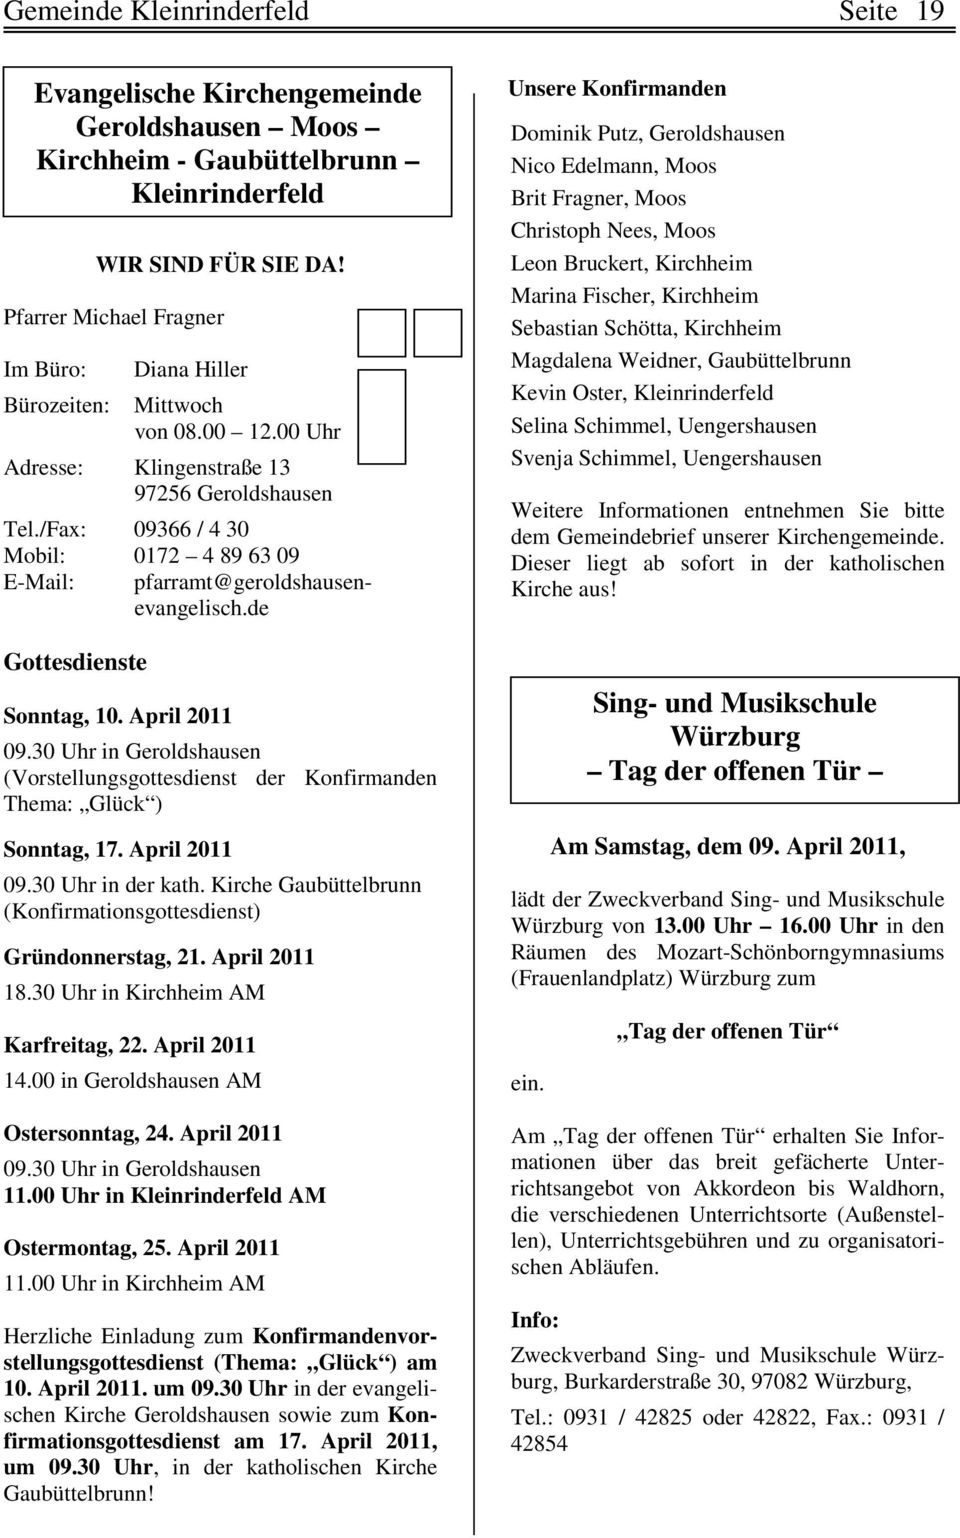 /Fax: 09366 / 4 30 Mobil: 0172 4 89 63 09 E-Mail: pfarramt@geroldshausenevangelisch.de Gottesdienste Sonntag, 10. April 2011 09.